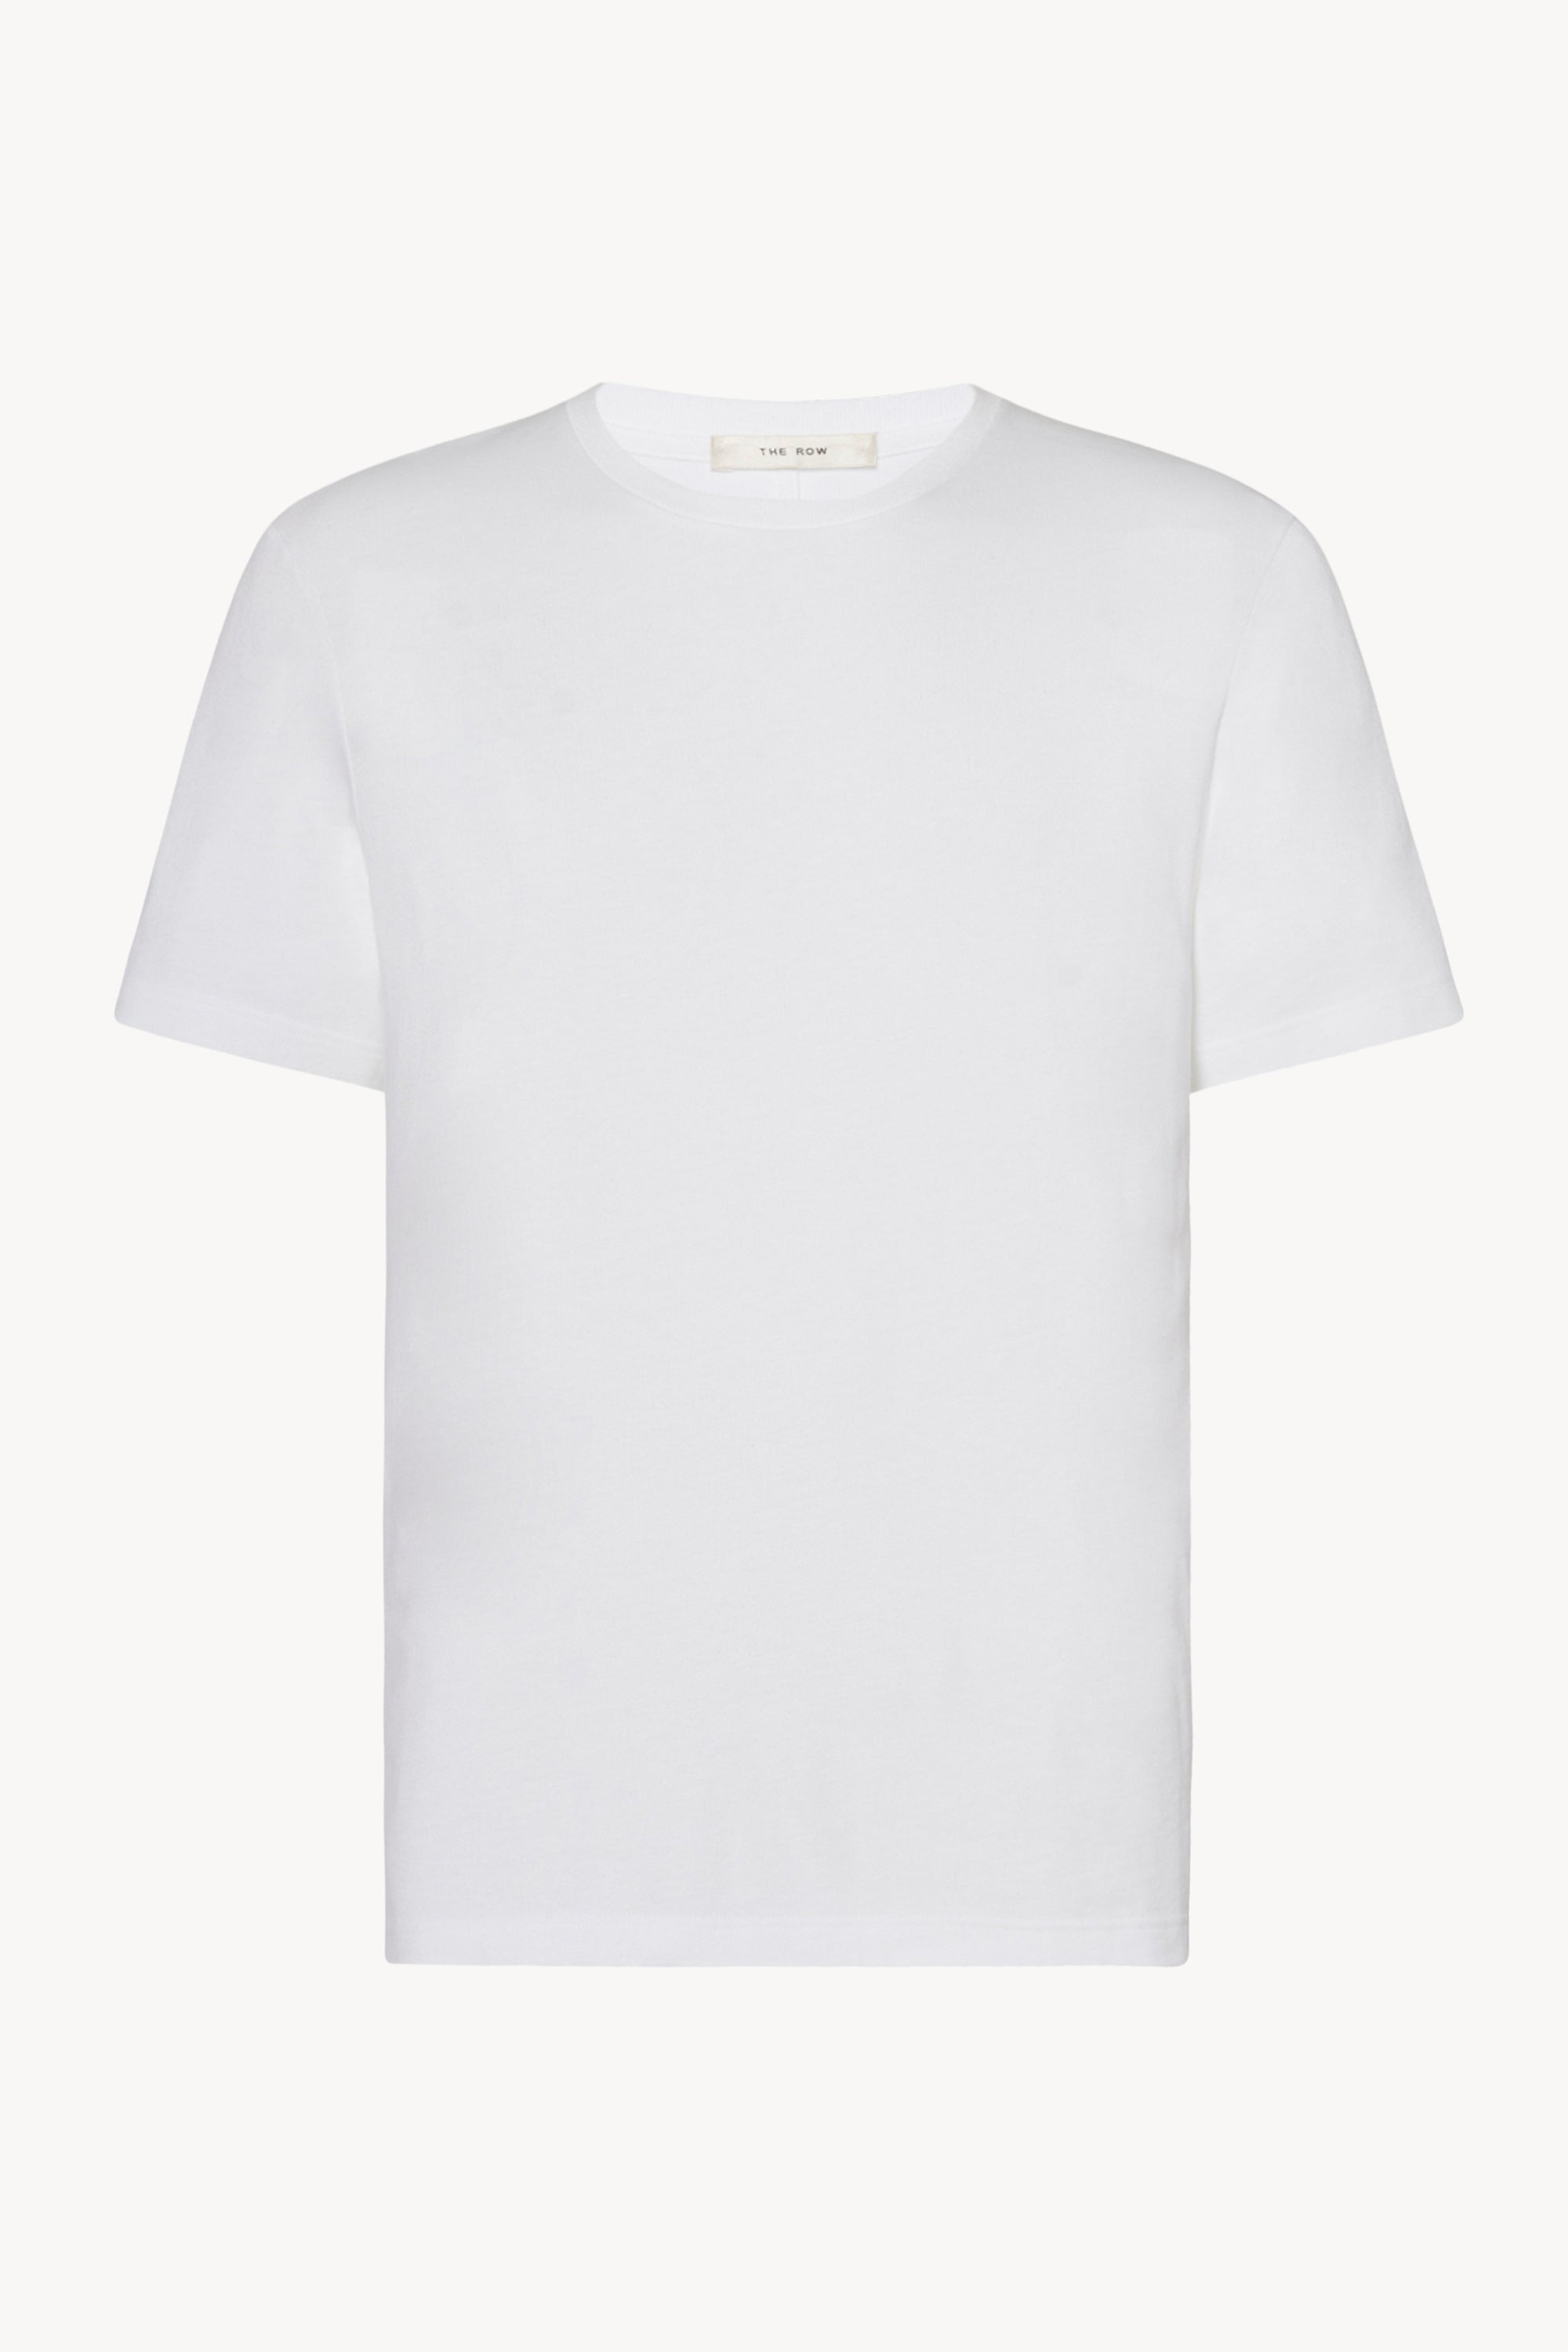 Louis Vuitton White Cotton Shirt -  Denmark